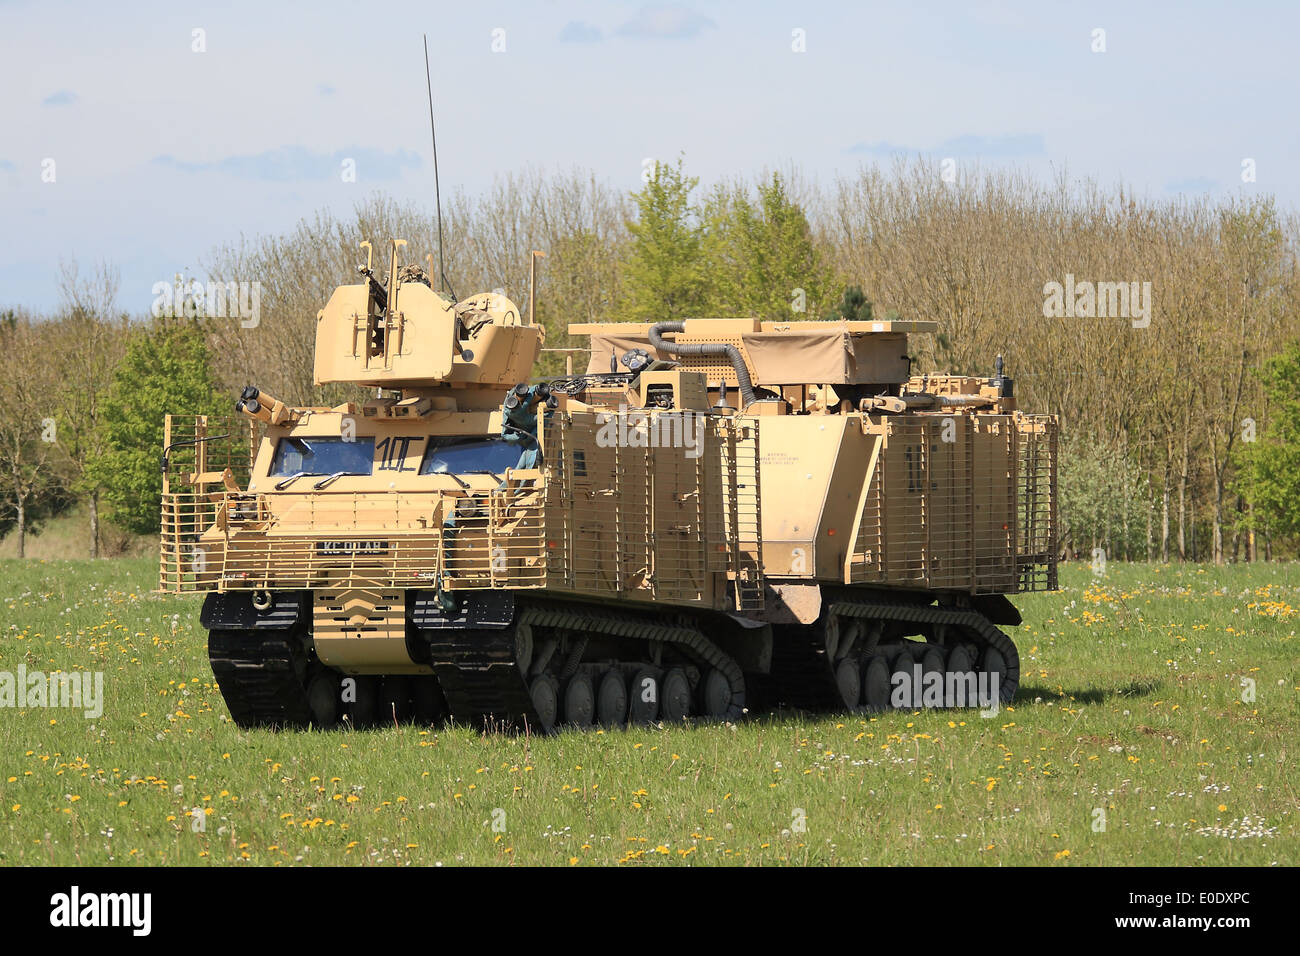 British Army Viking Bvs10 Protected All Terrain Vehicle Stock Photo Alamy